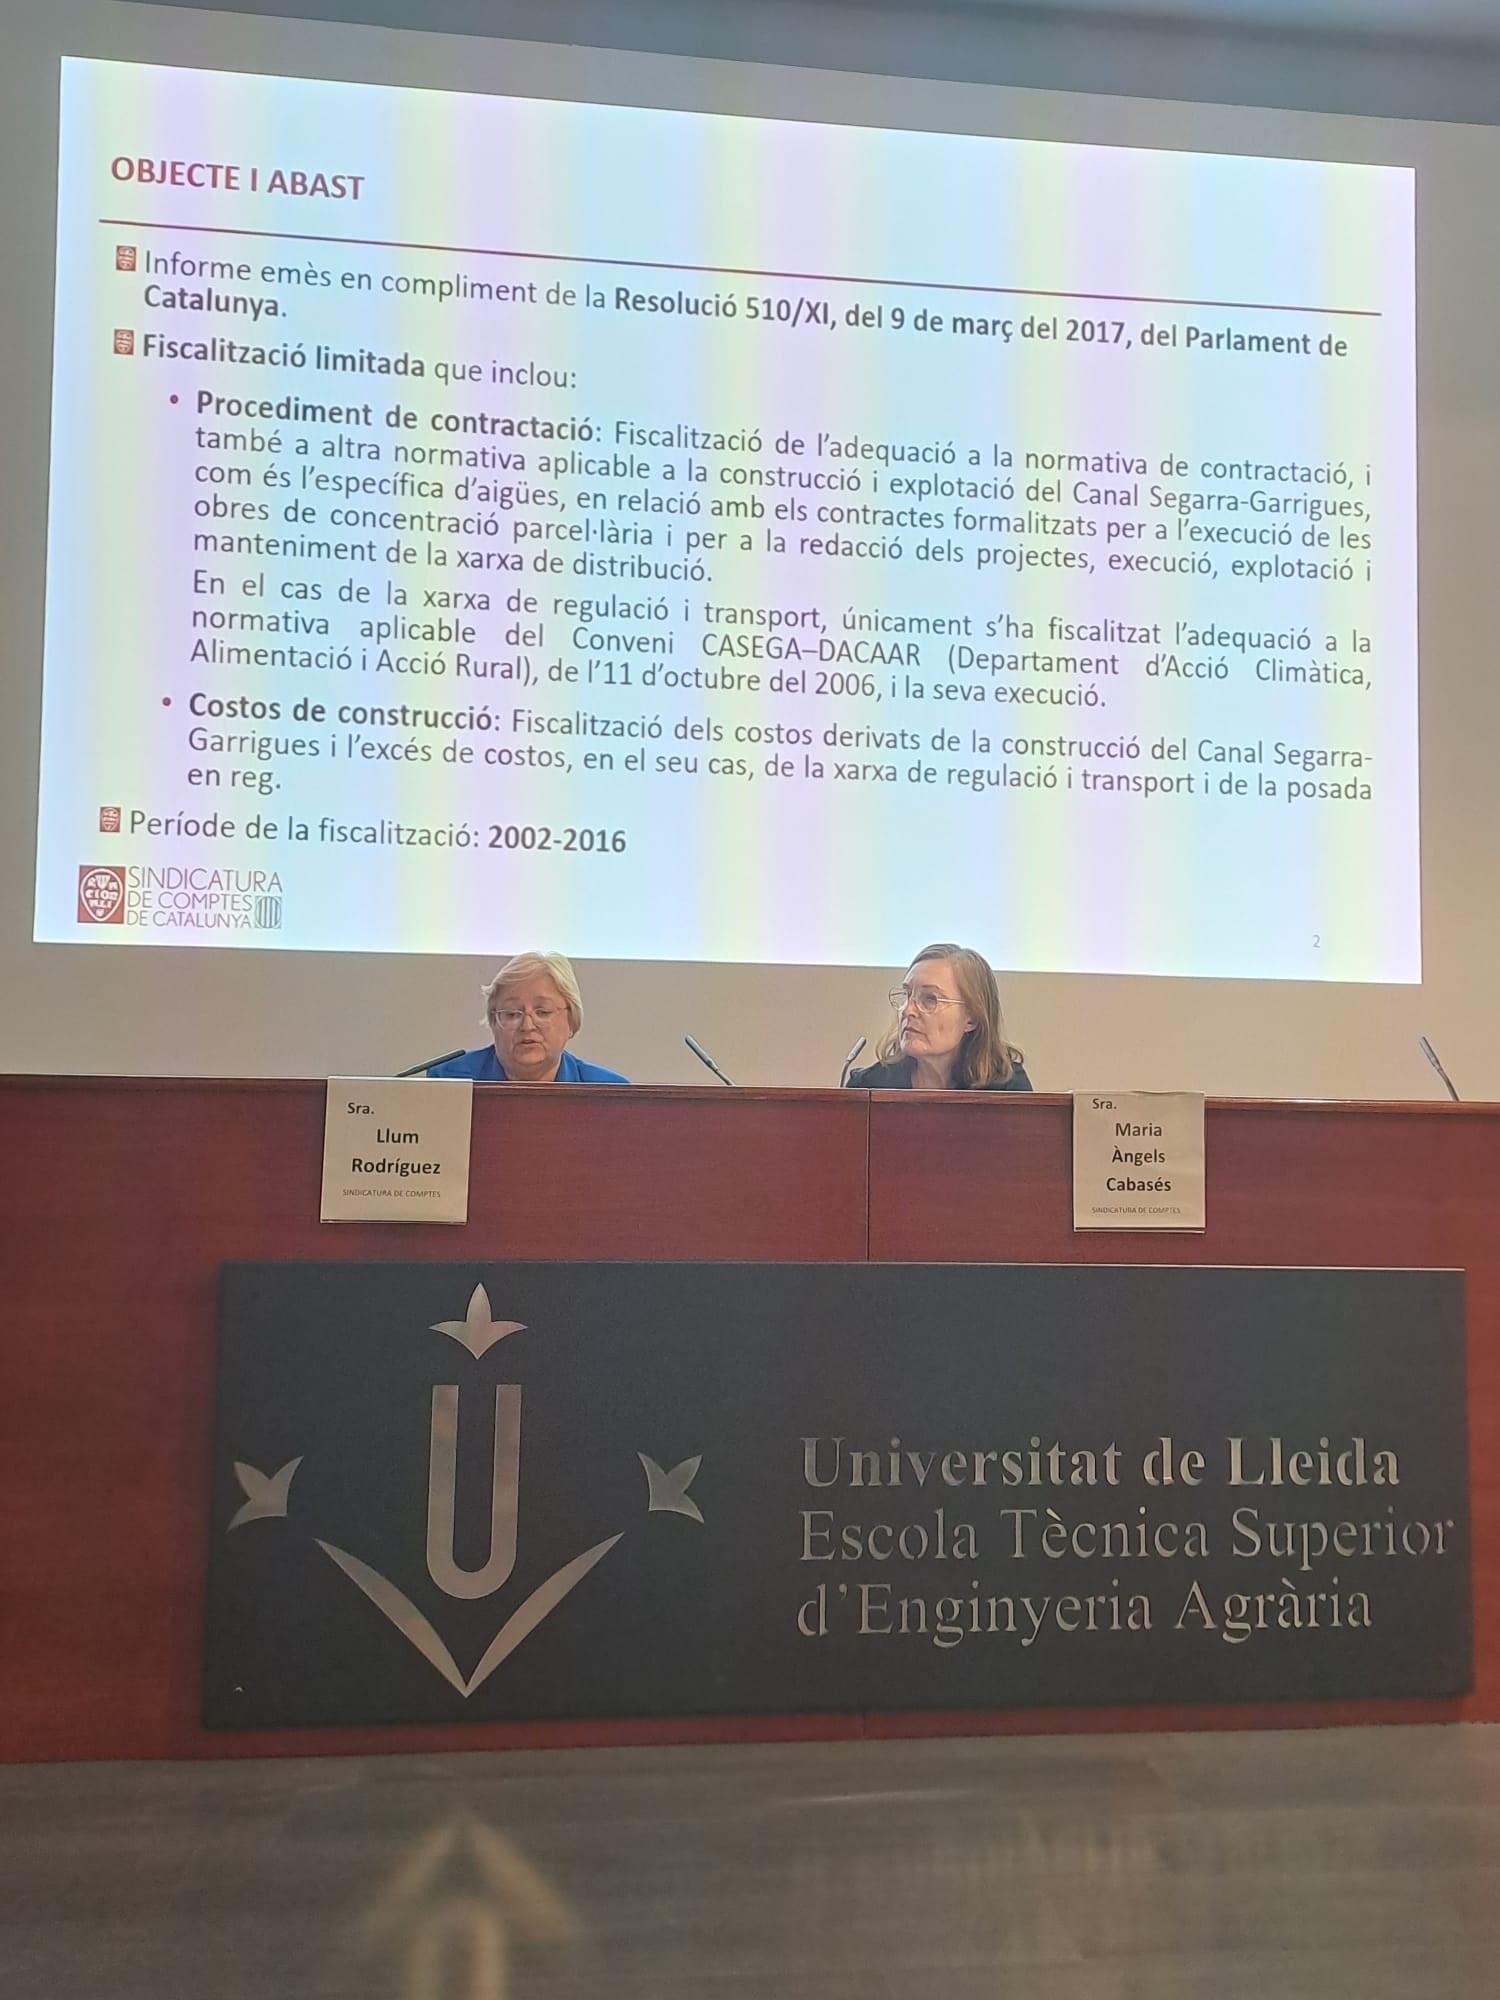 La síndica Rodríguez presenta l'informe en una aula del Campus d'Agrònoms de la UdL